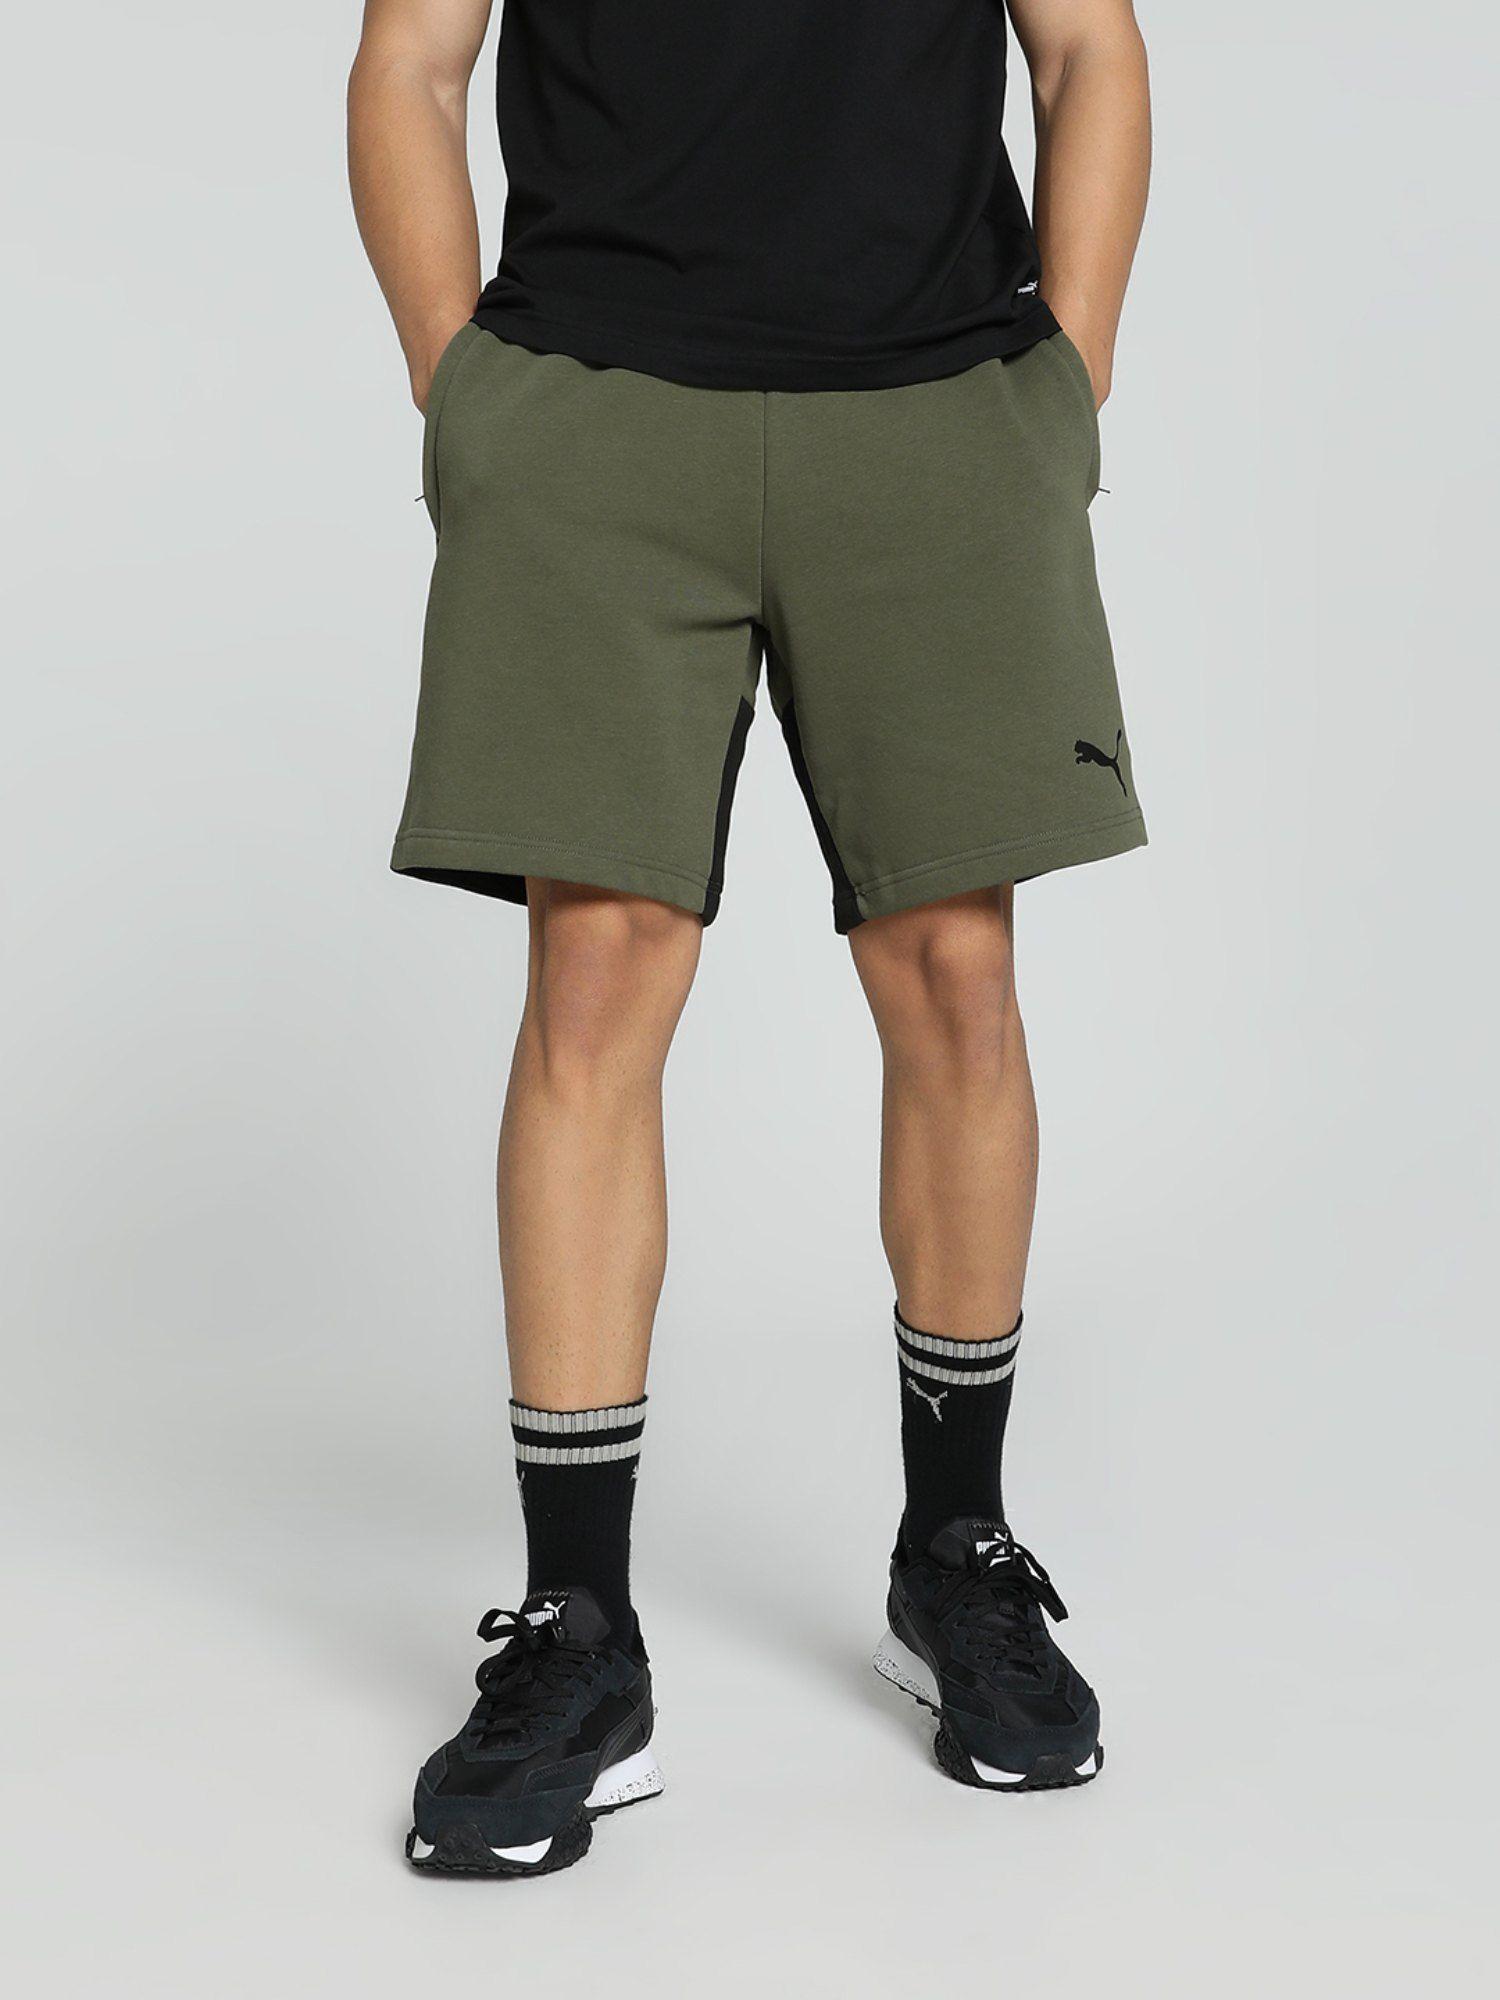 teamcup-casuals-men-green-shorts